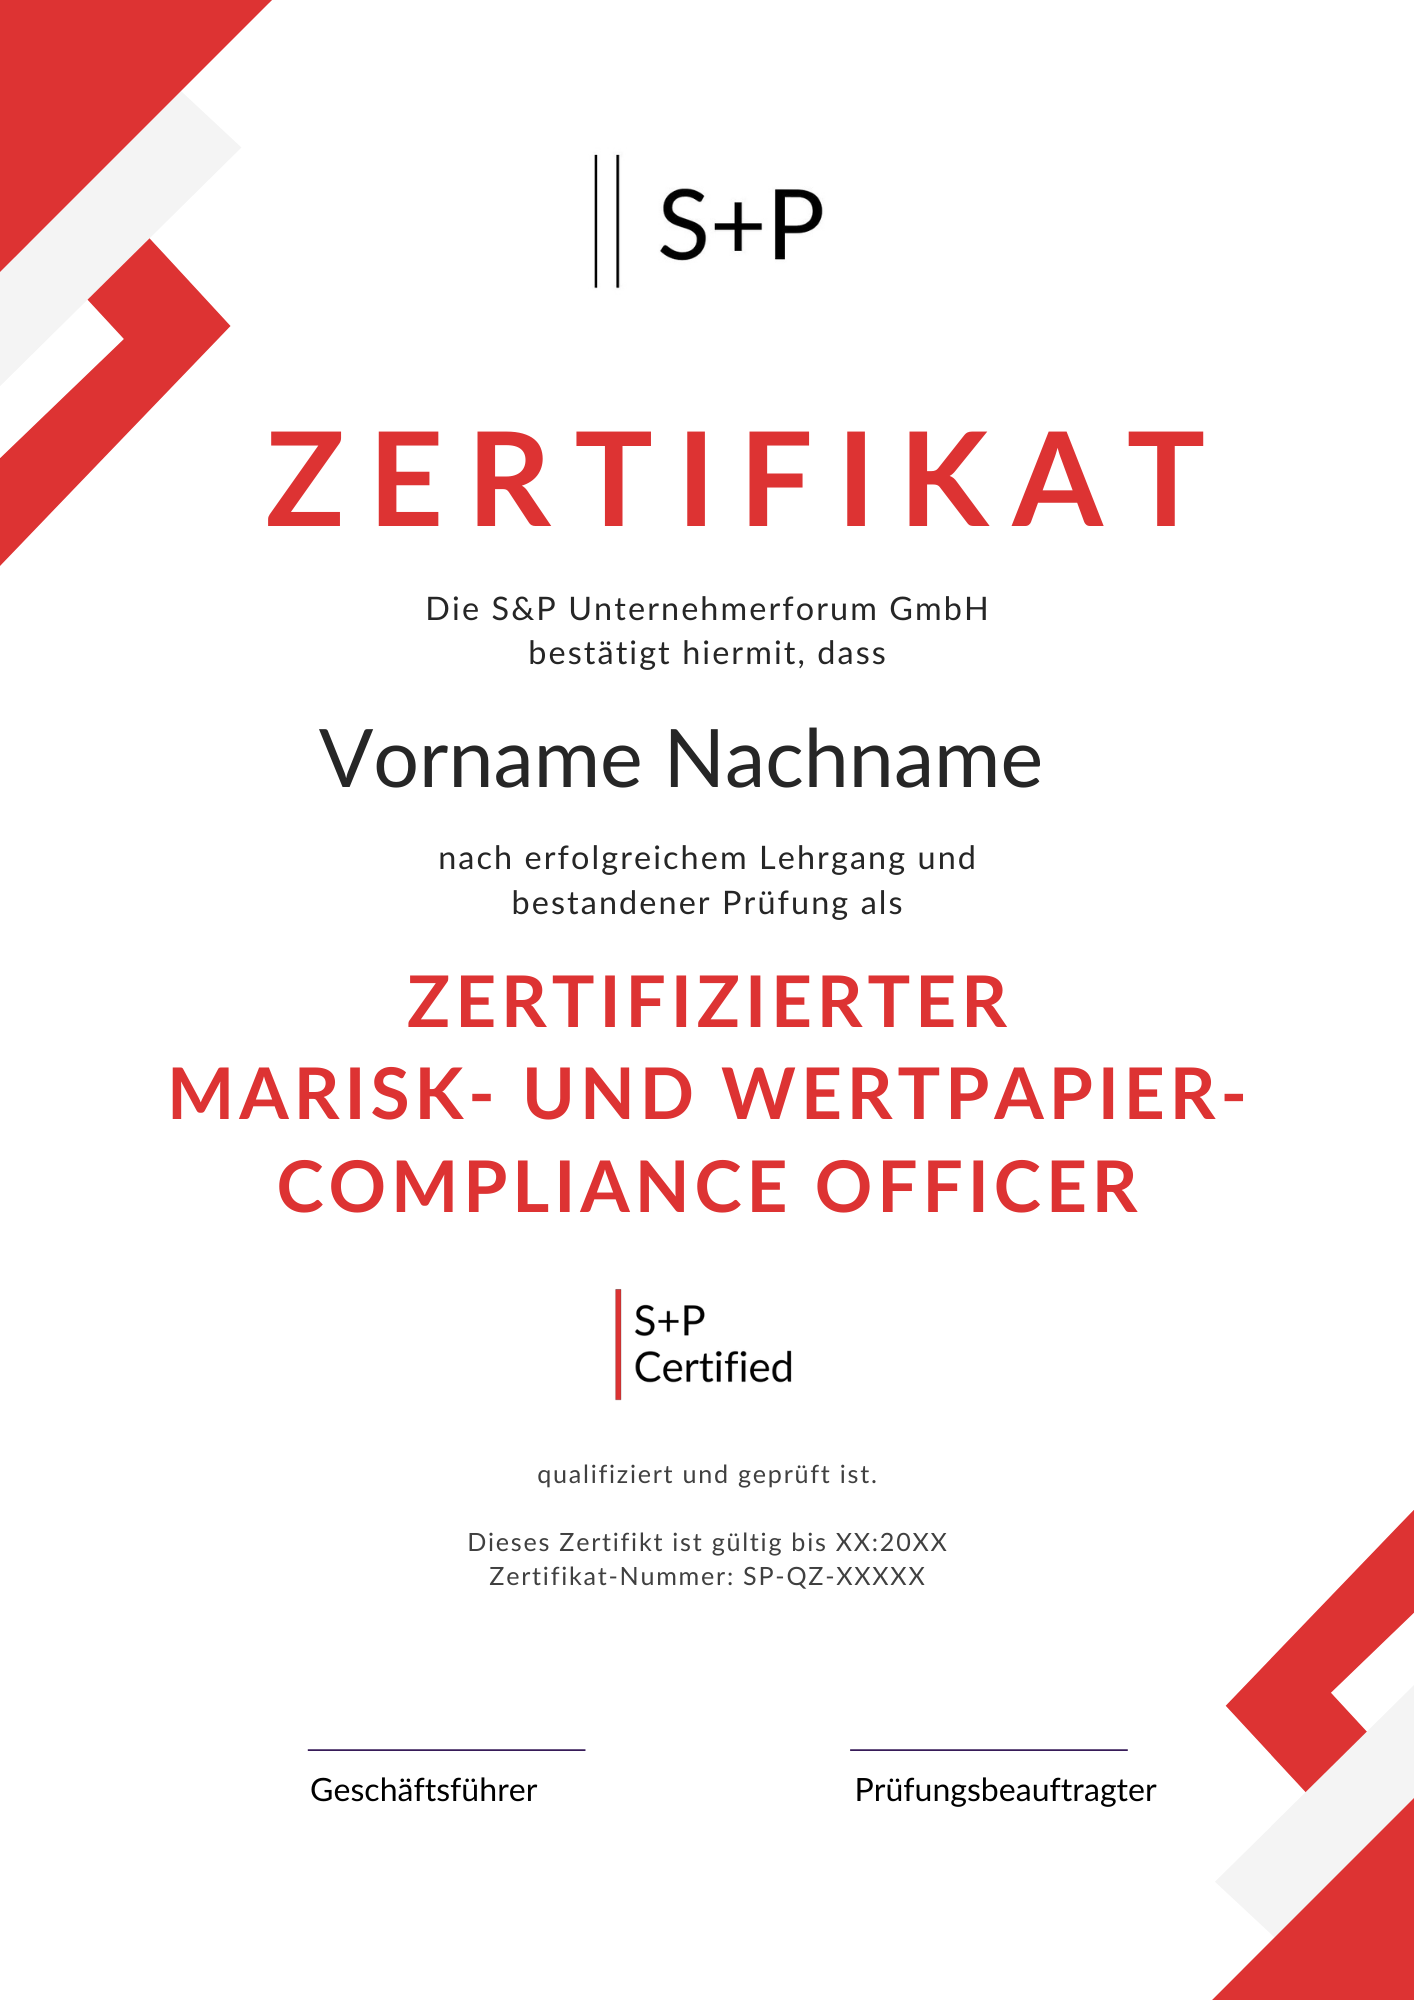 Lehrgang WpHG- / MaRisk-Compliance Officer